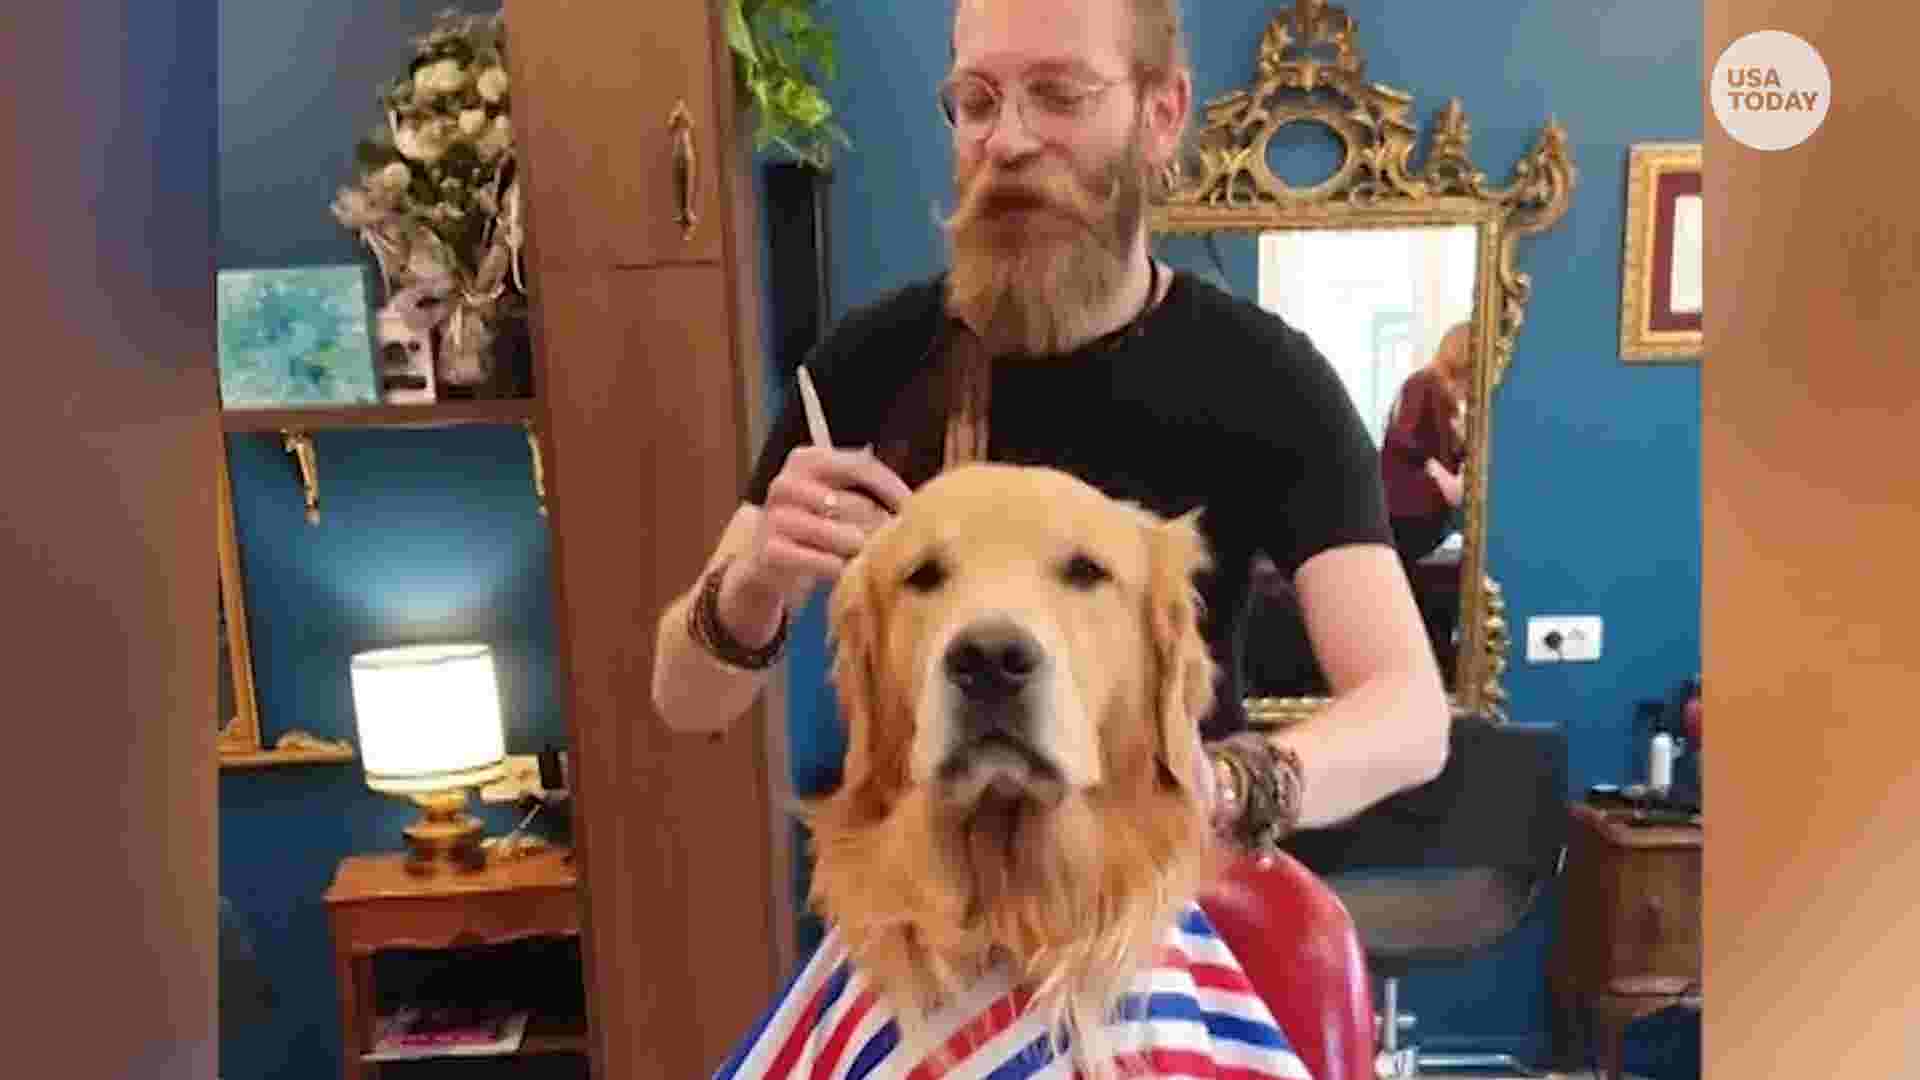 Patient dog gets haircut at barber shop